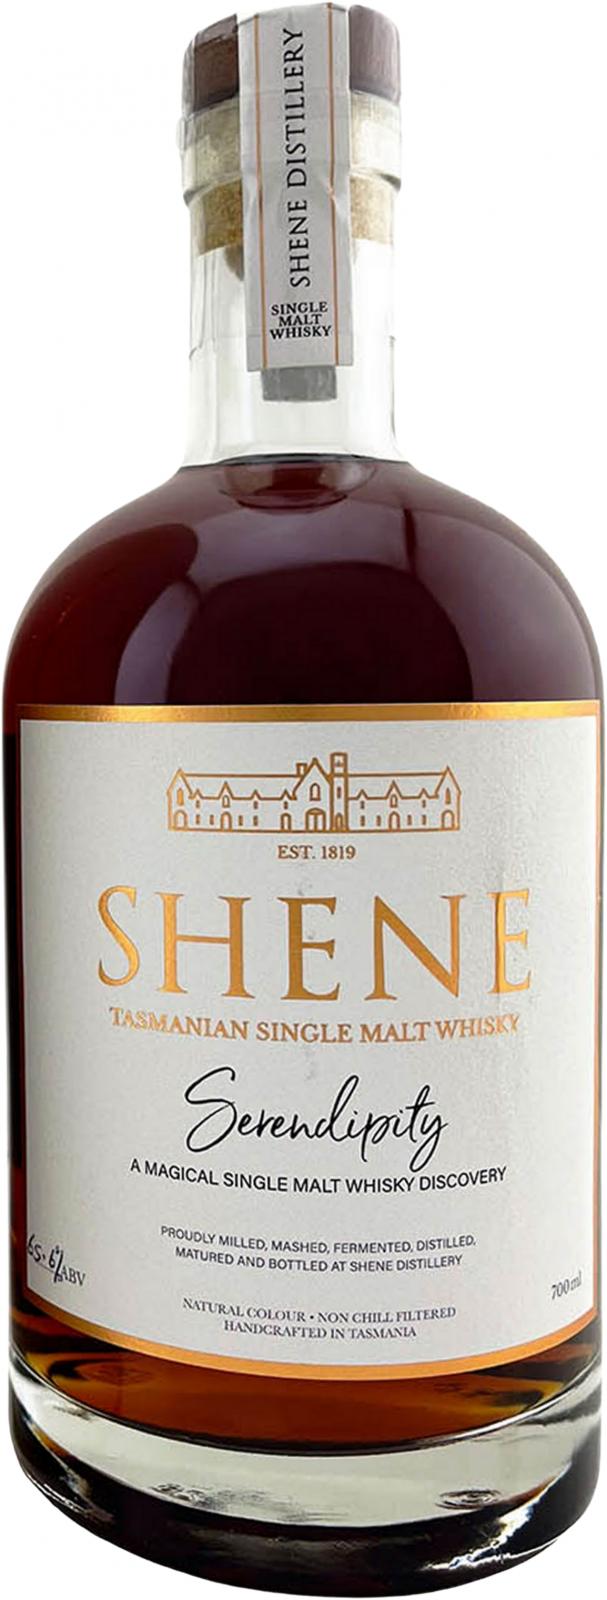 Shene Serendipity Cognac Muscat Tokay Finish The Old Barrelhouse 65.6% 700ml